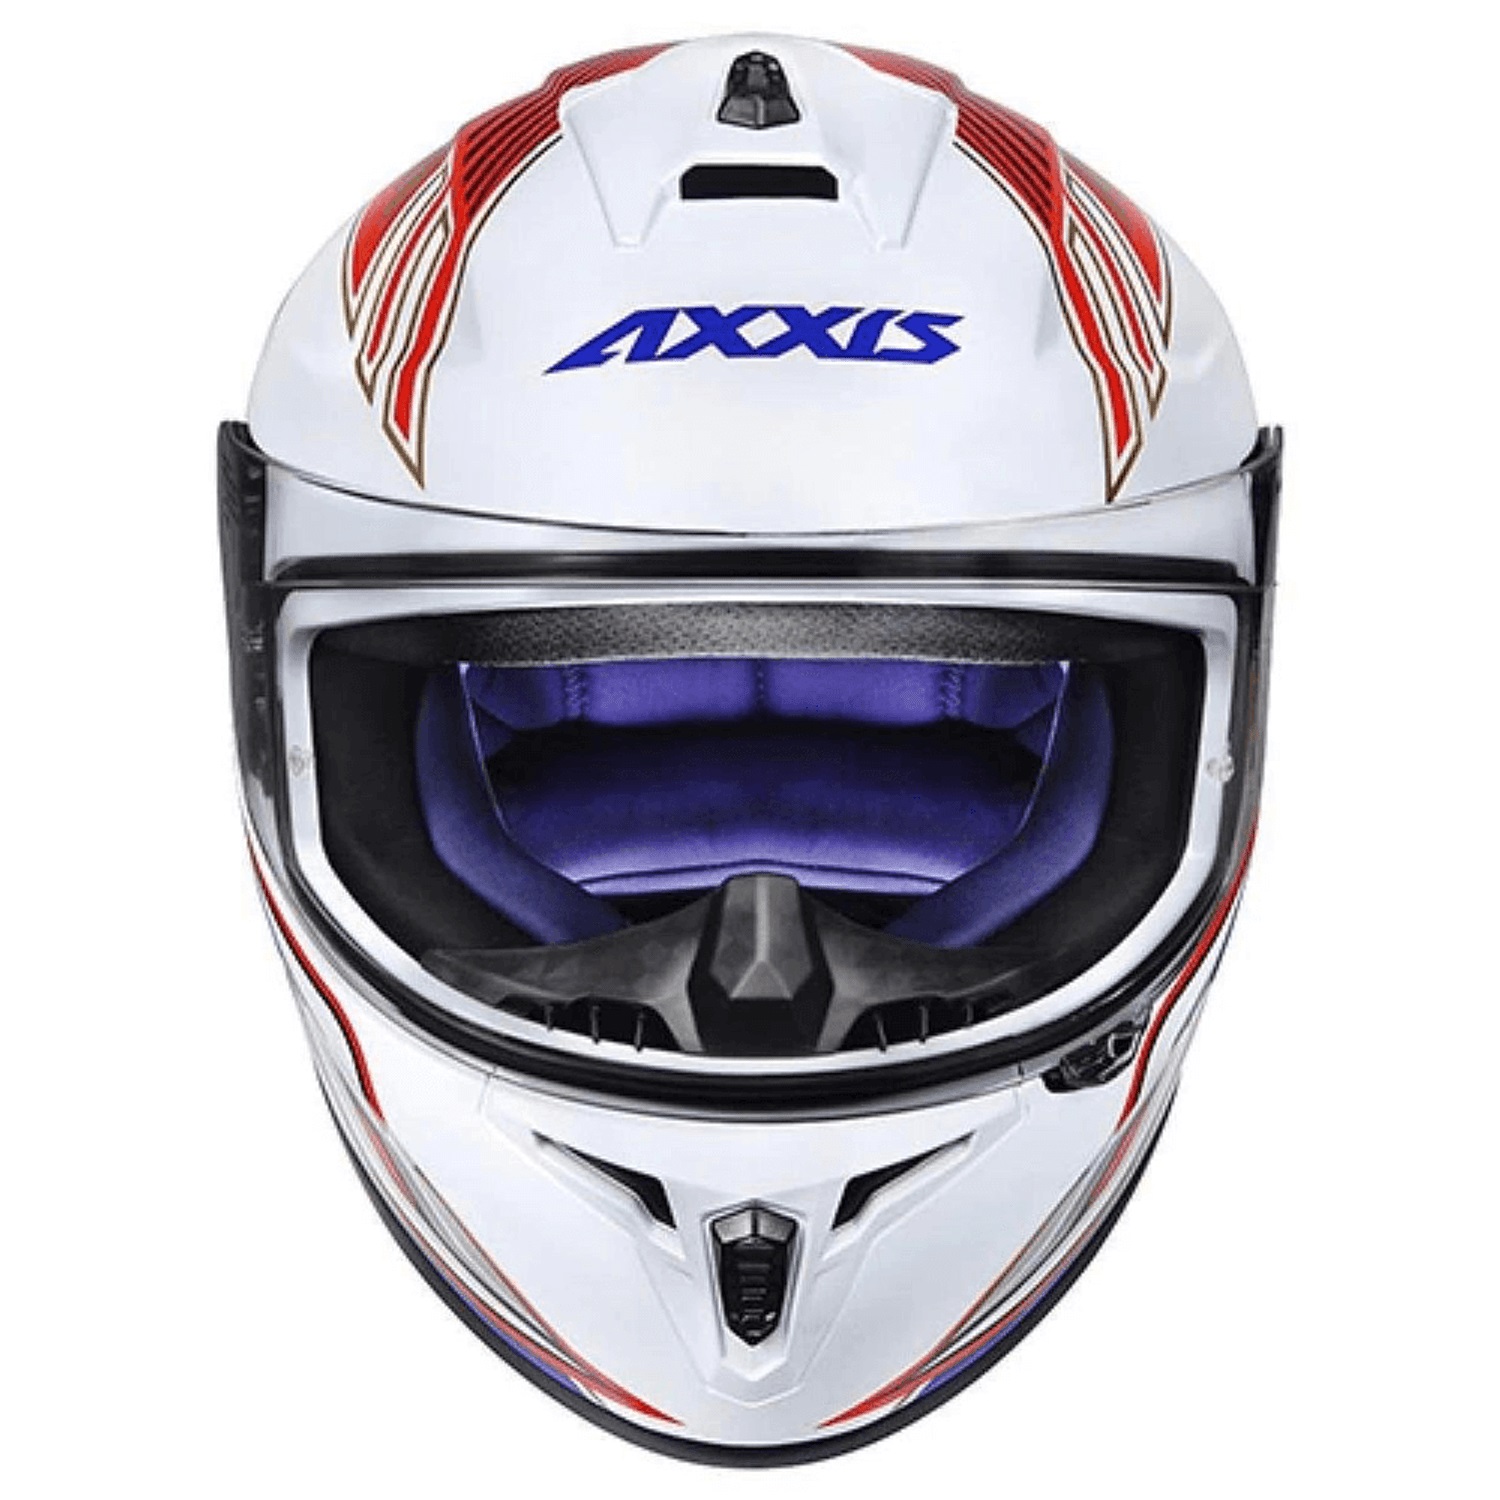 Capacete Axxis Draken Racer Branco Vermelho  - Planet Bike Shop Moto Acessórios